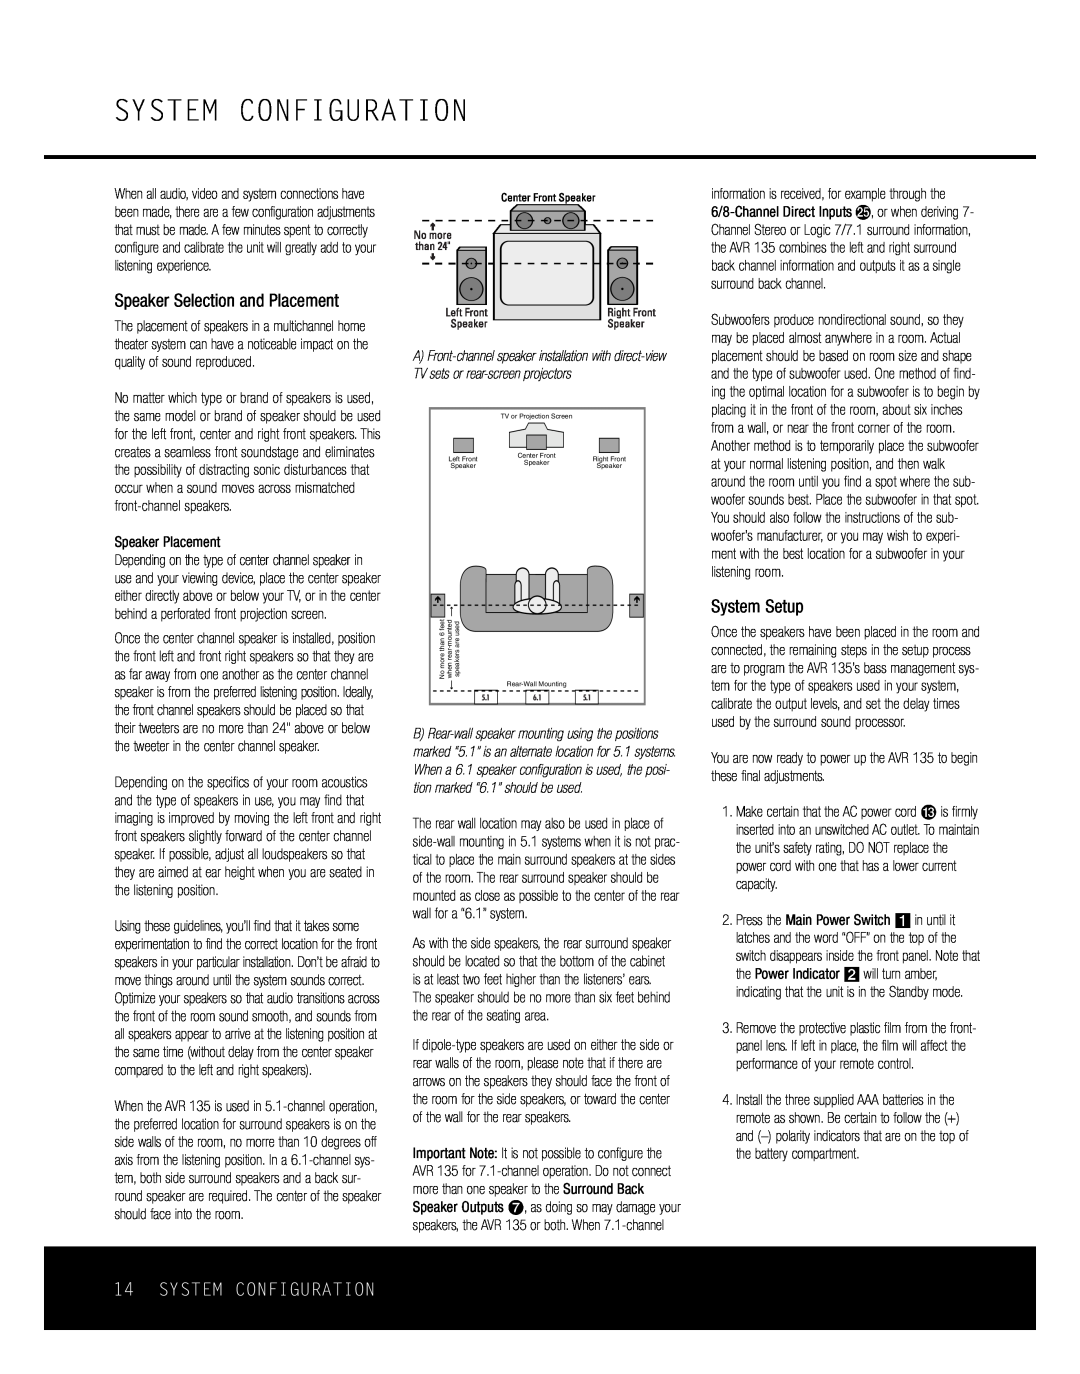 Harman-Kardon AVR 135 owner manual System Configuration, Speaker Selection and Placement, System Setup 